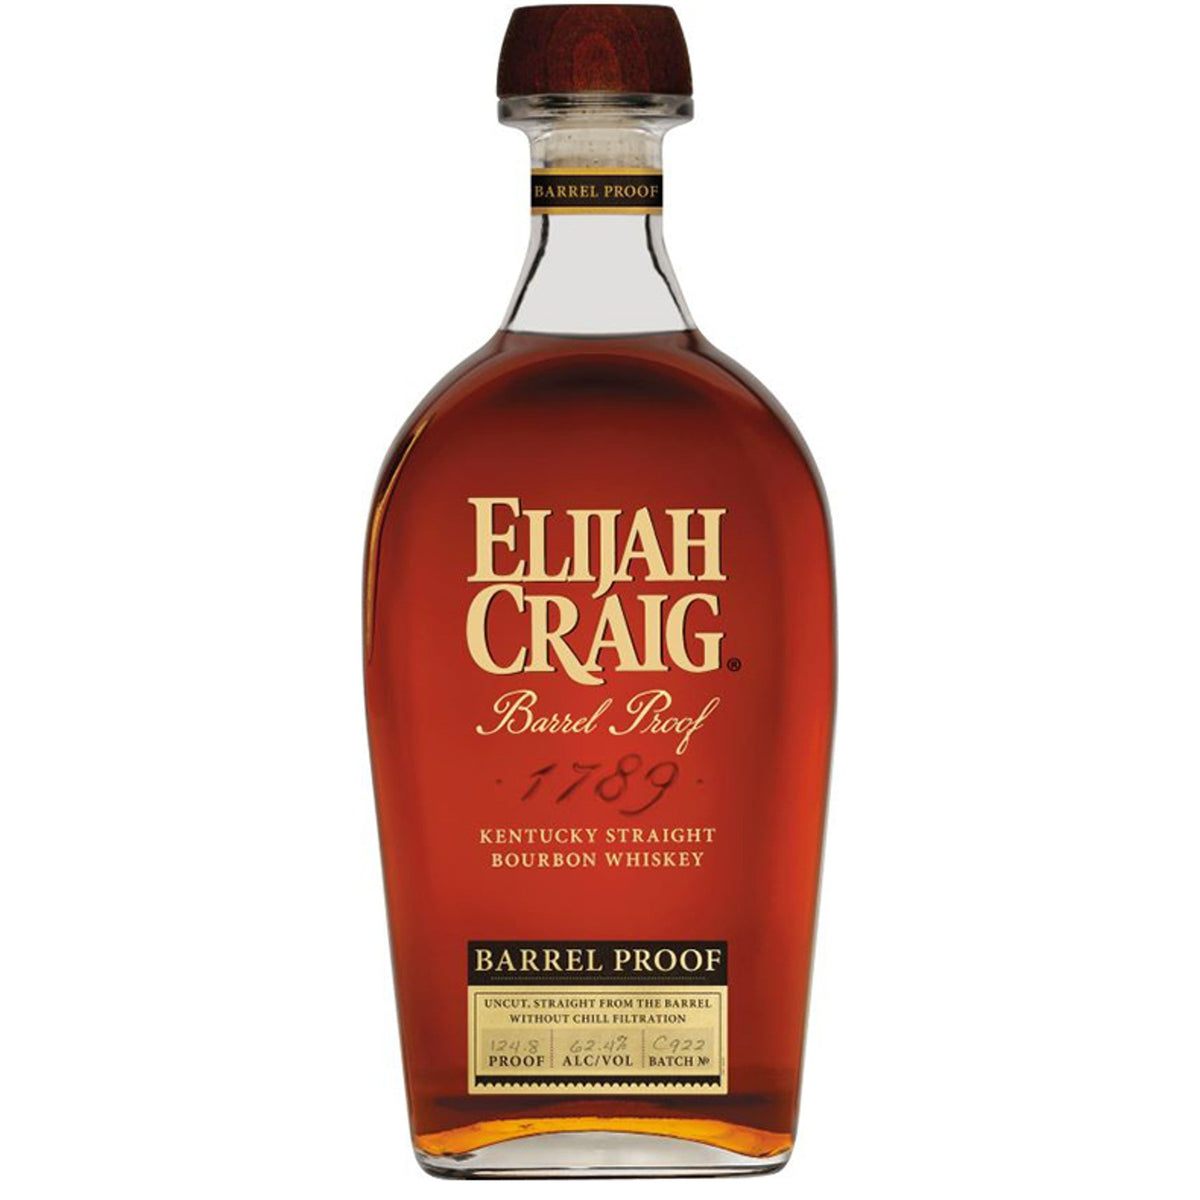 Elijah Craig Barrel Proof C922 Kentucky Straight Bourbon Whiskey (750ml)